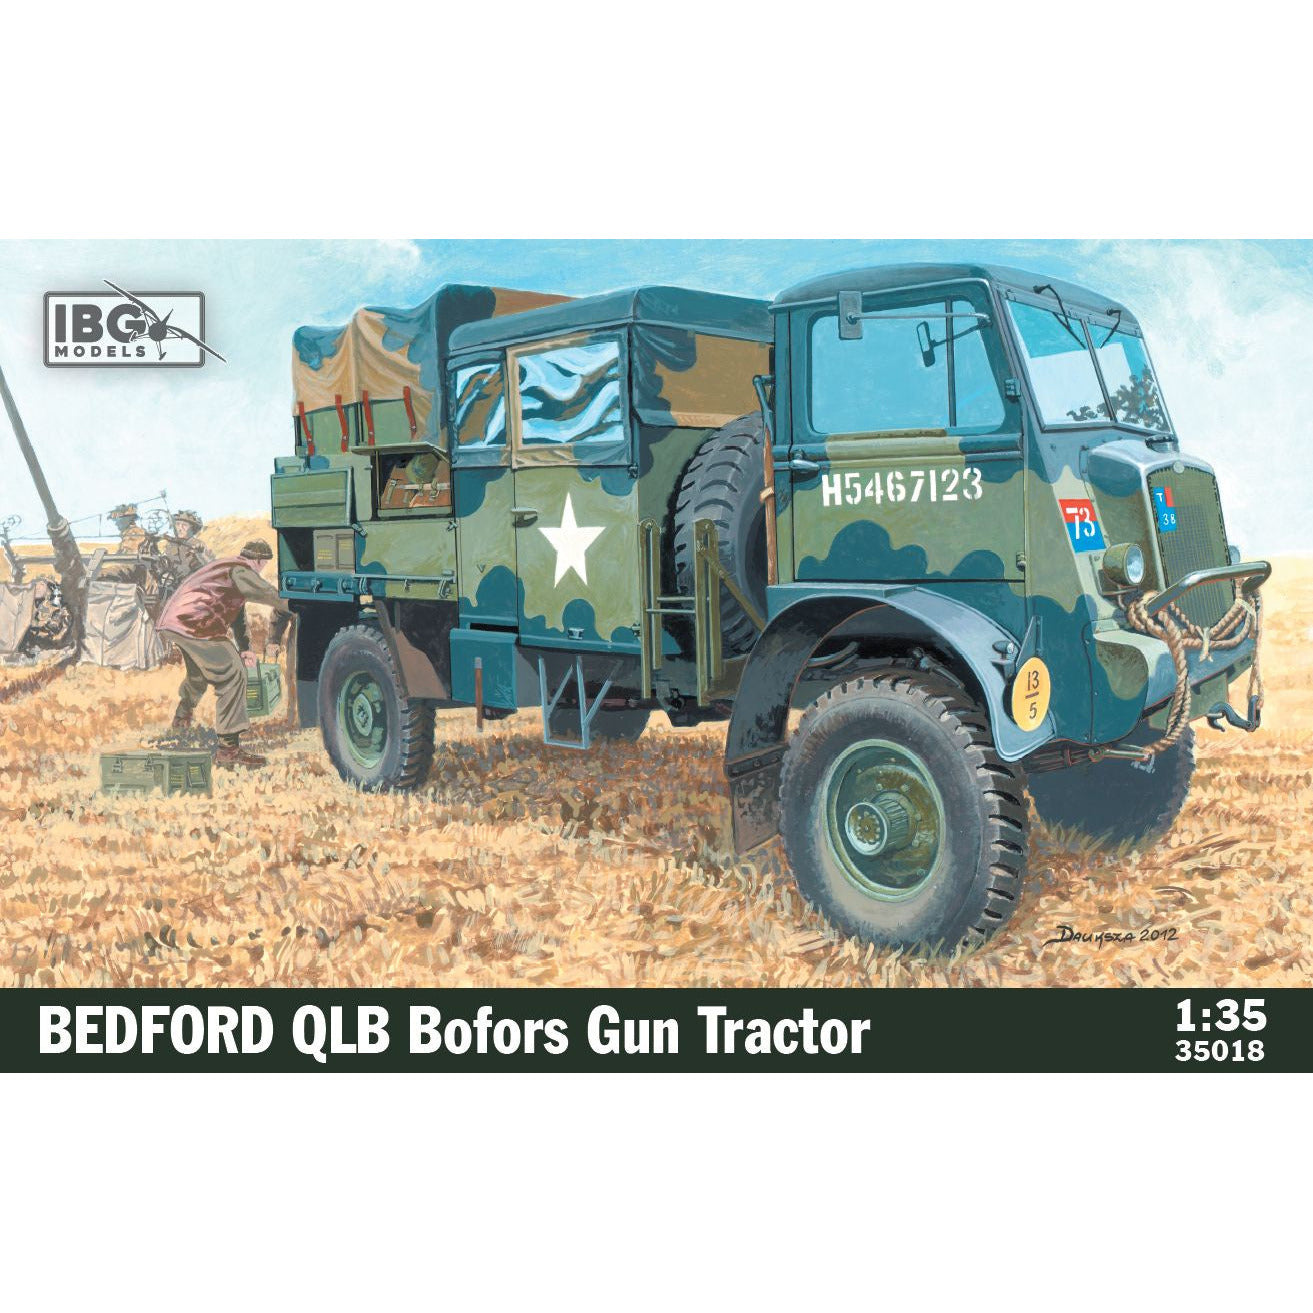 Bedford QLB Bofors Gun Tractor 1/35 #35018 by IBG Models